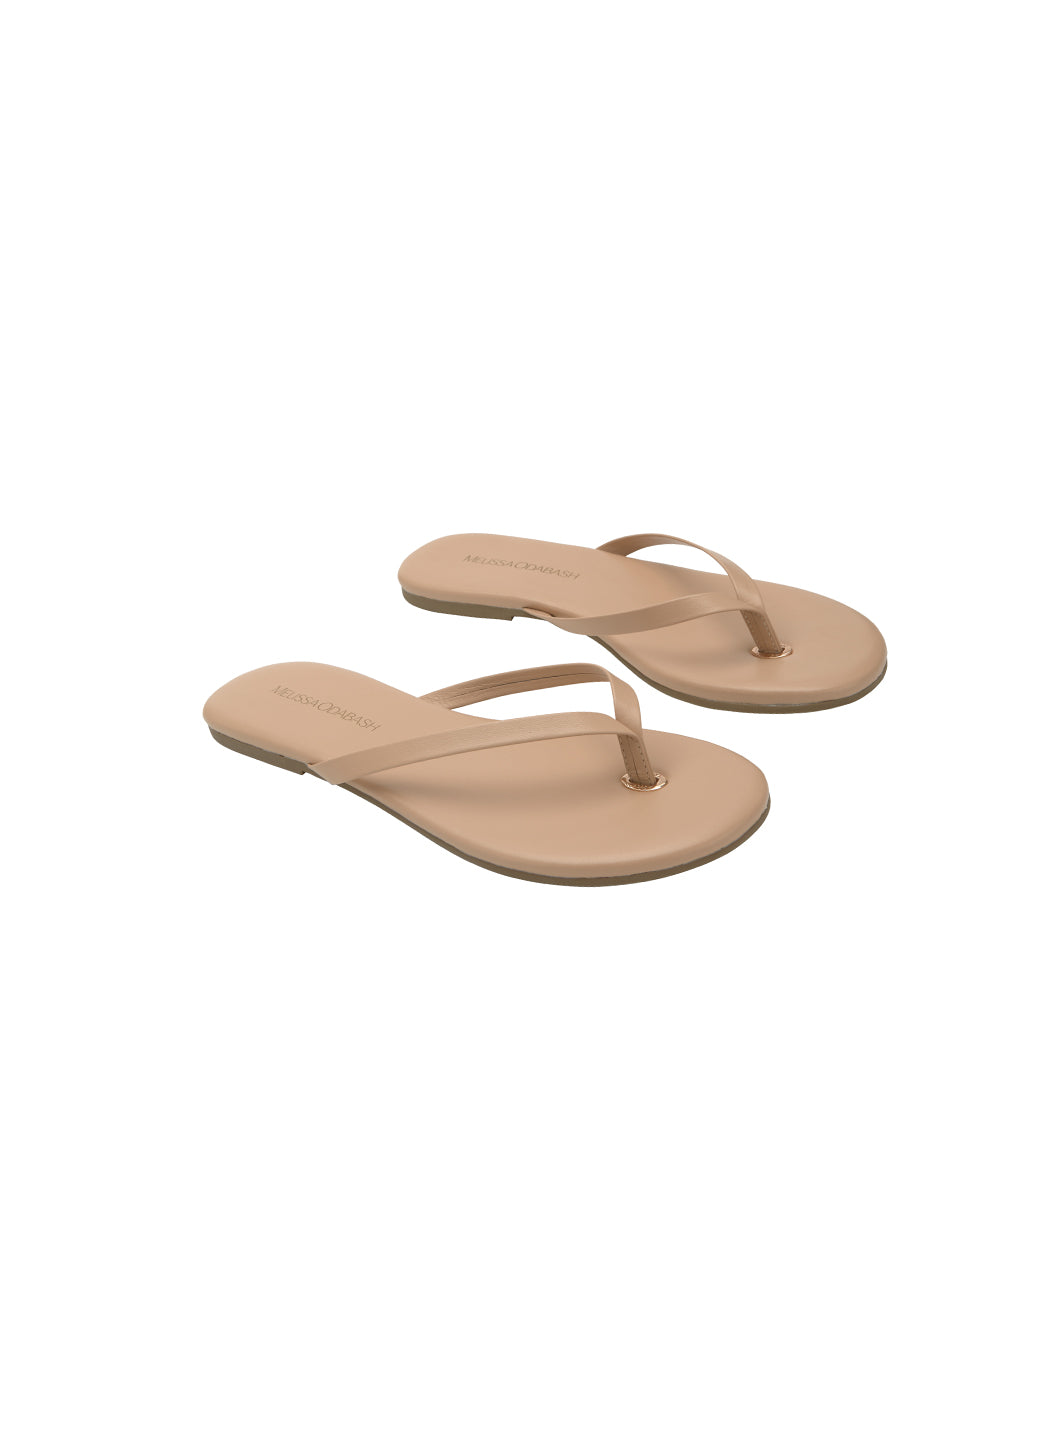 sandals-nude_cutouts